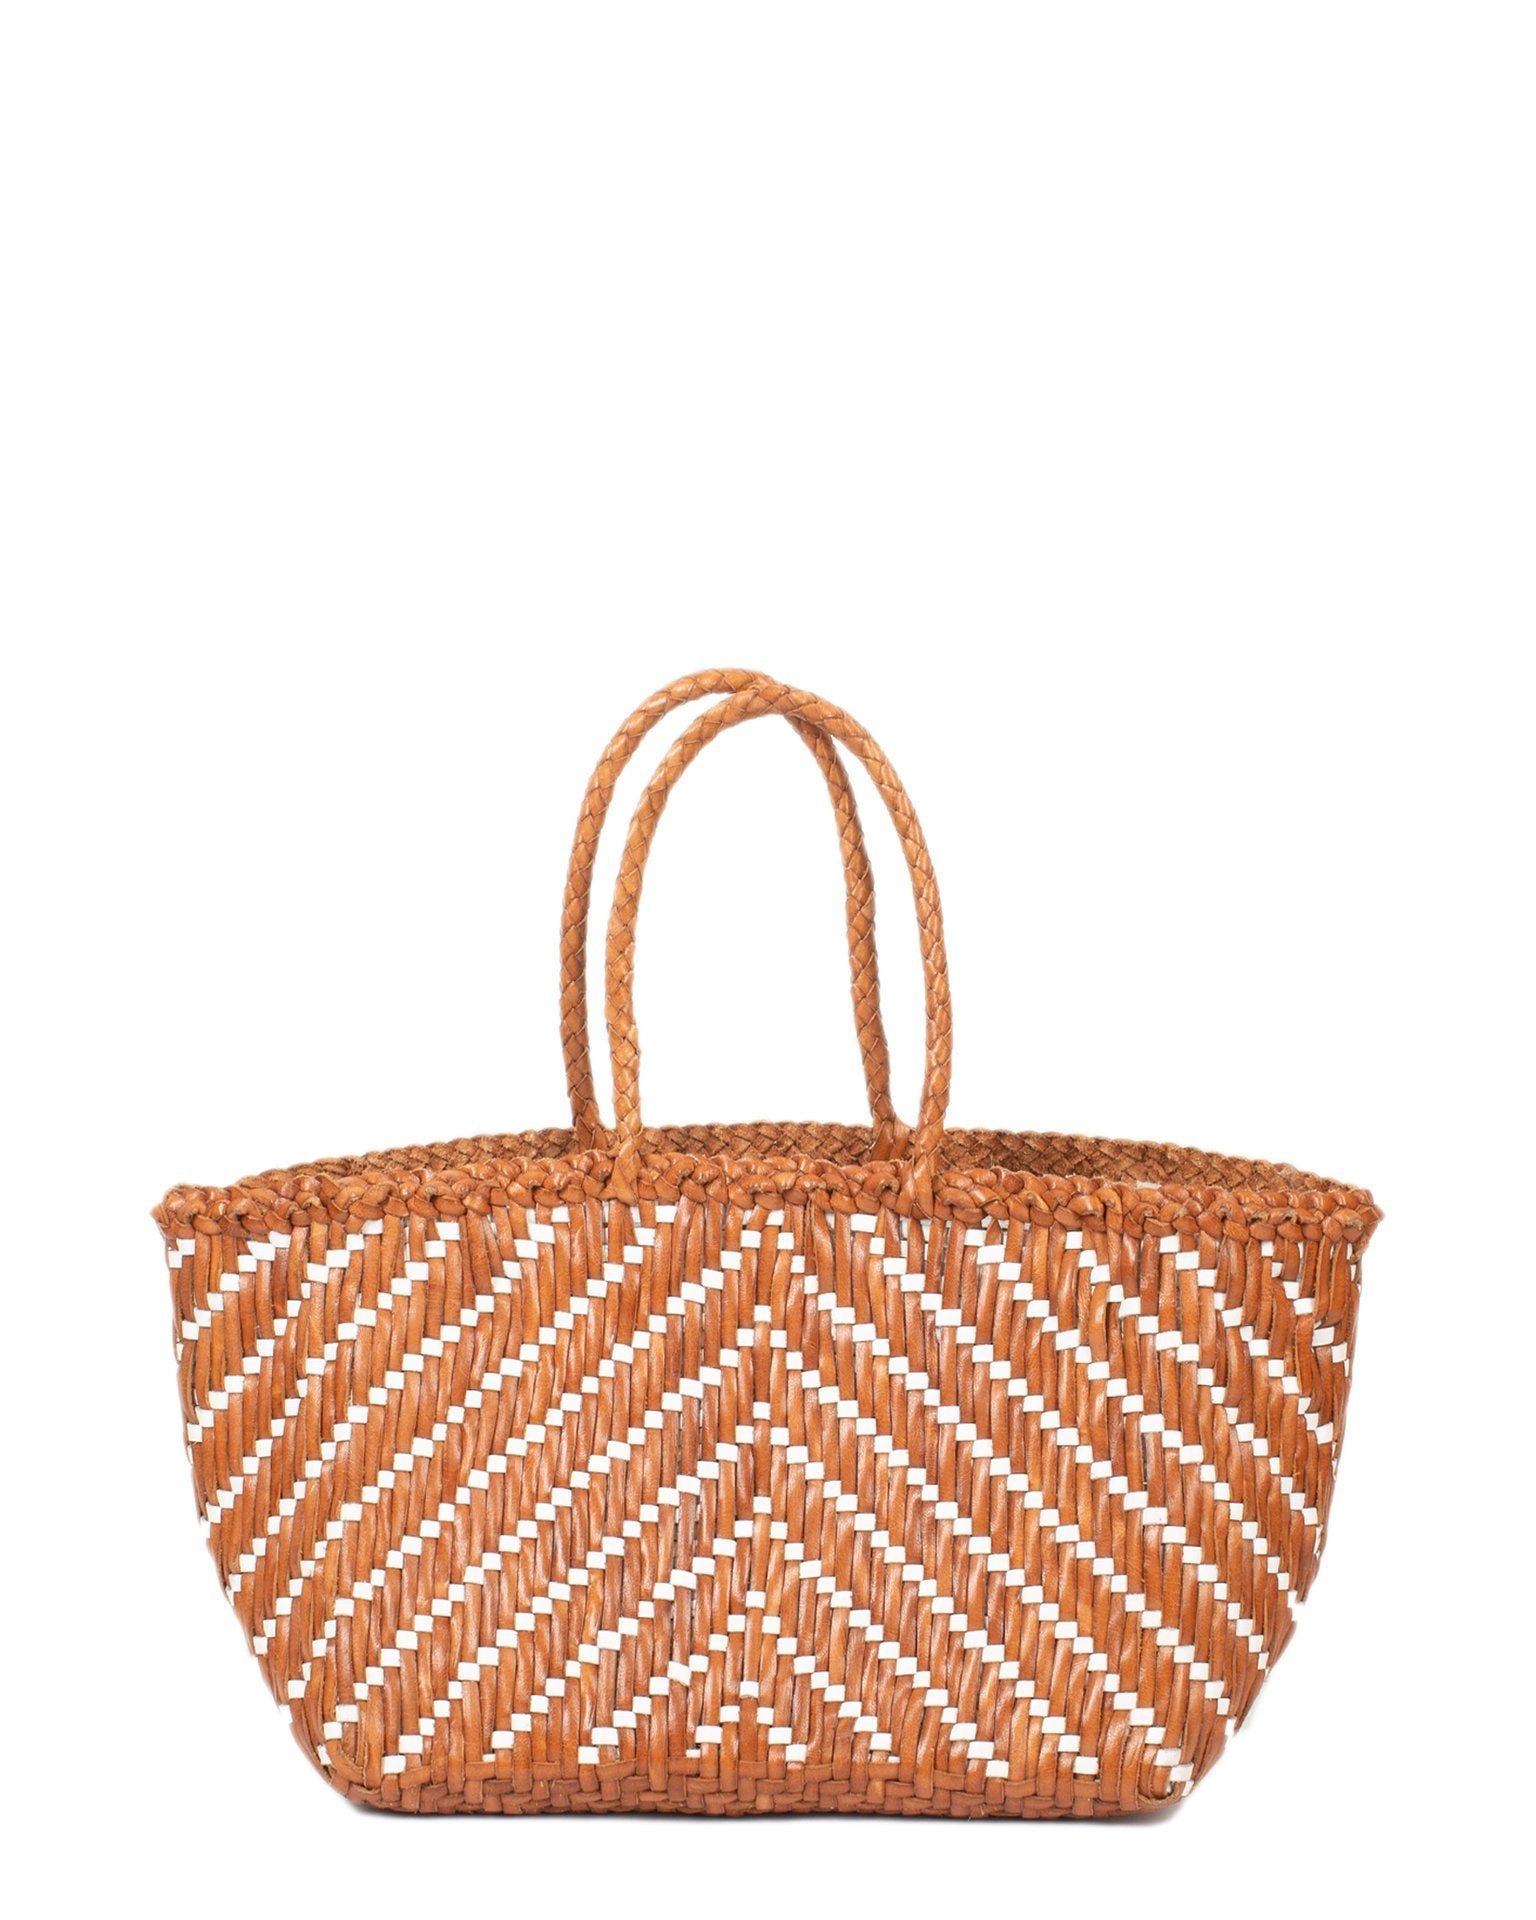 Kumari Basket - Small in Tan/White